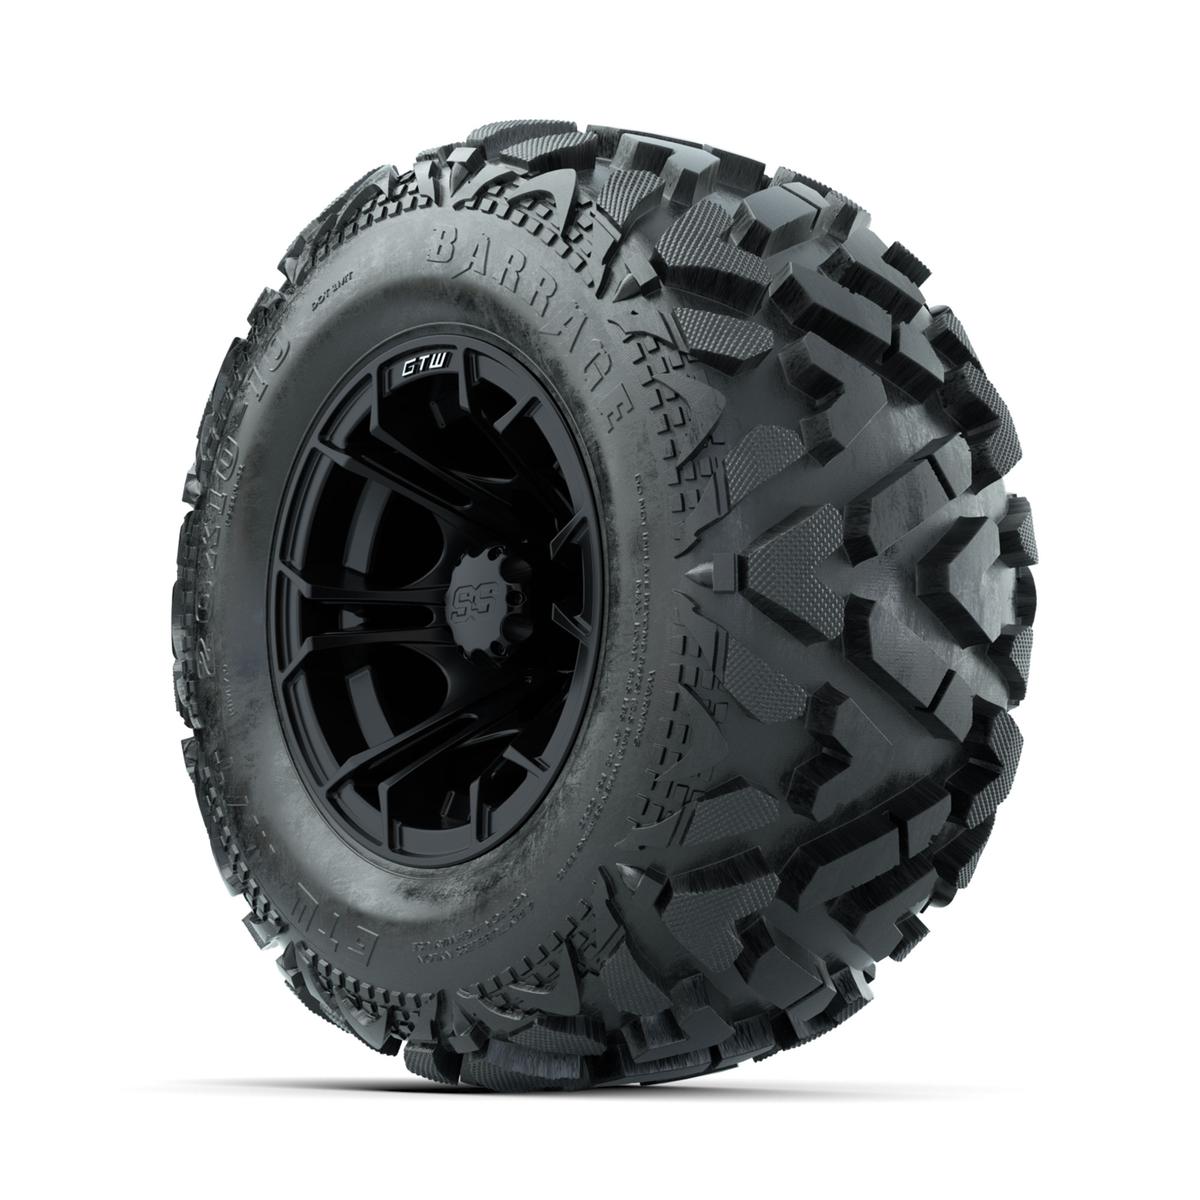 GTW Spyder Matte Black 10 in Wheels with 20x10-10 Barrage Mud Tires – Full Set